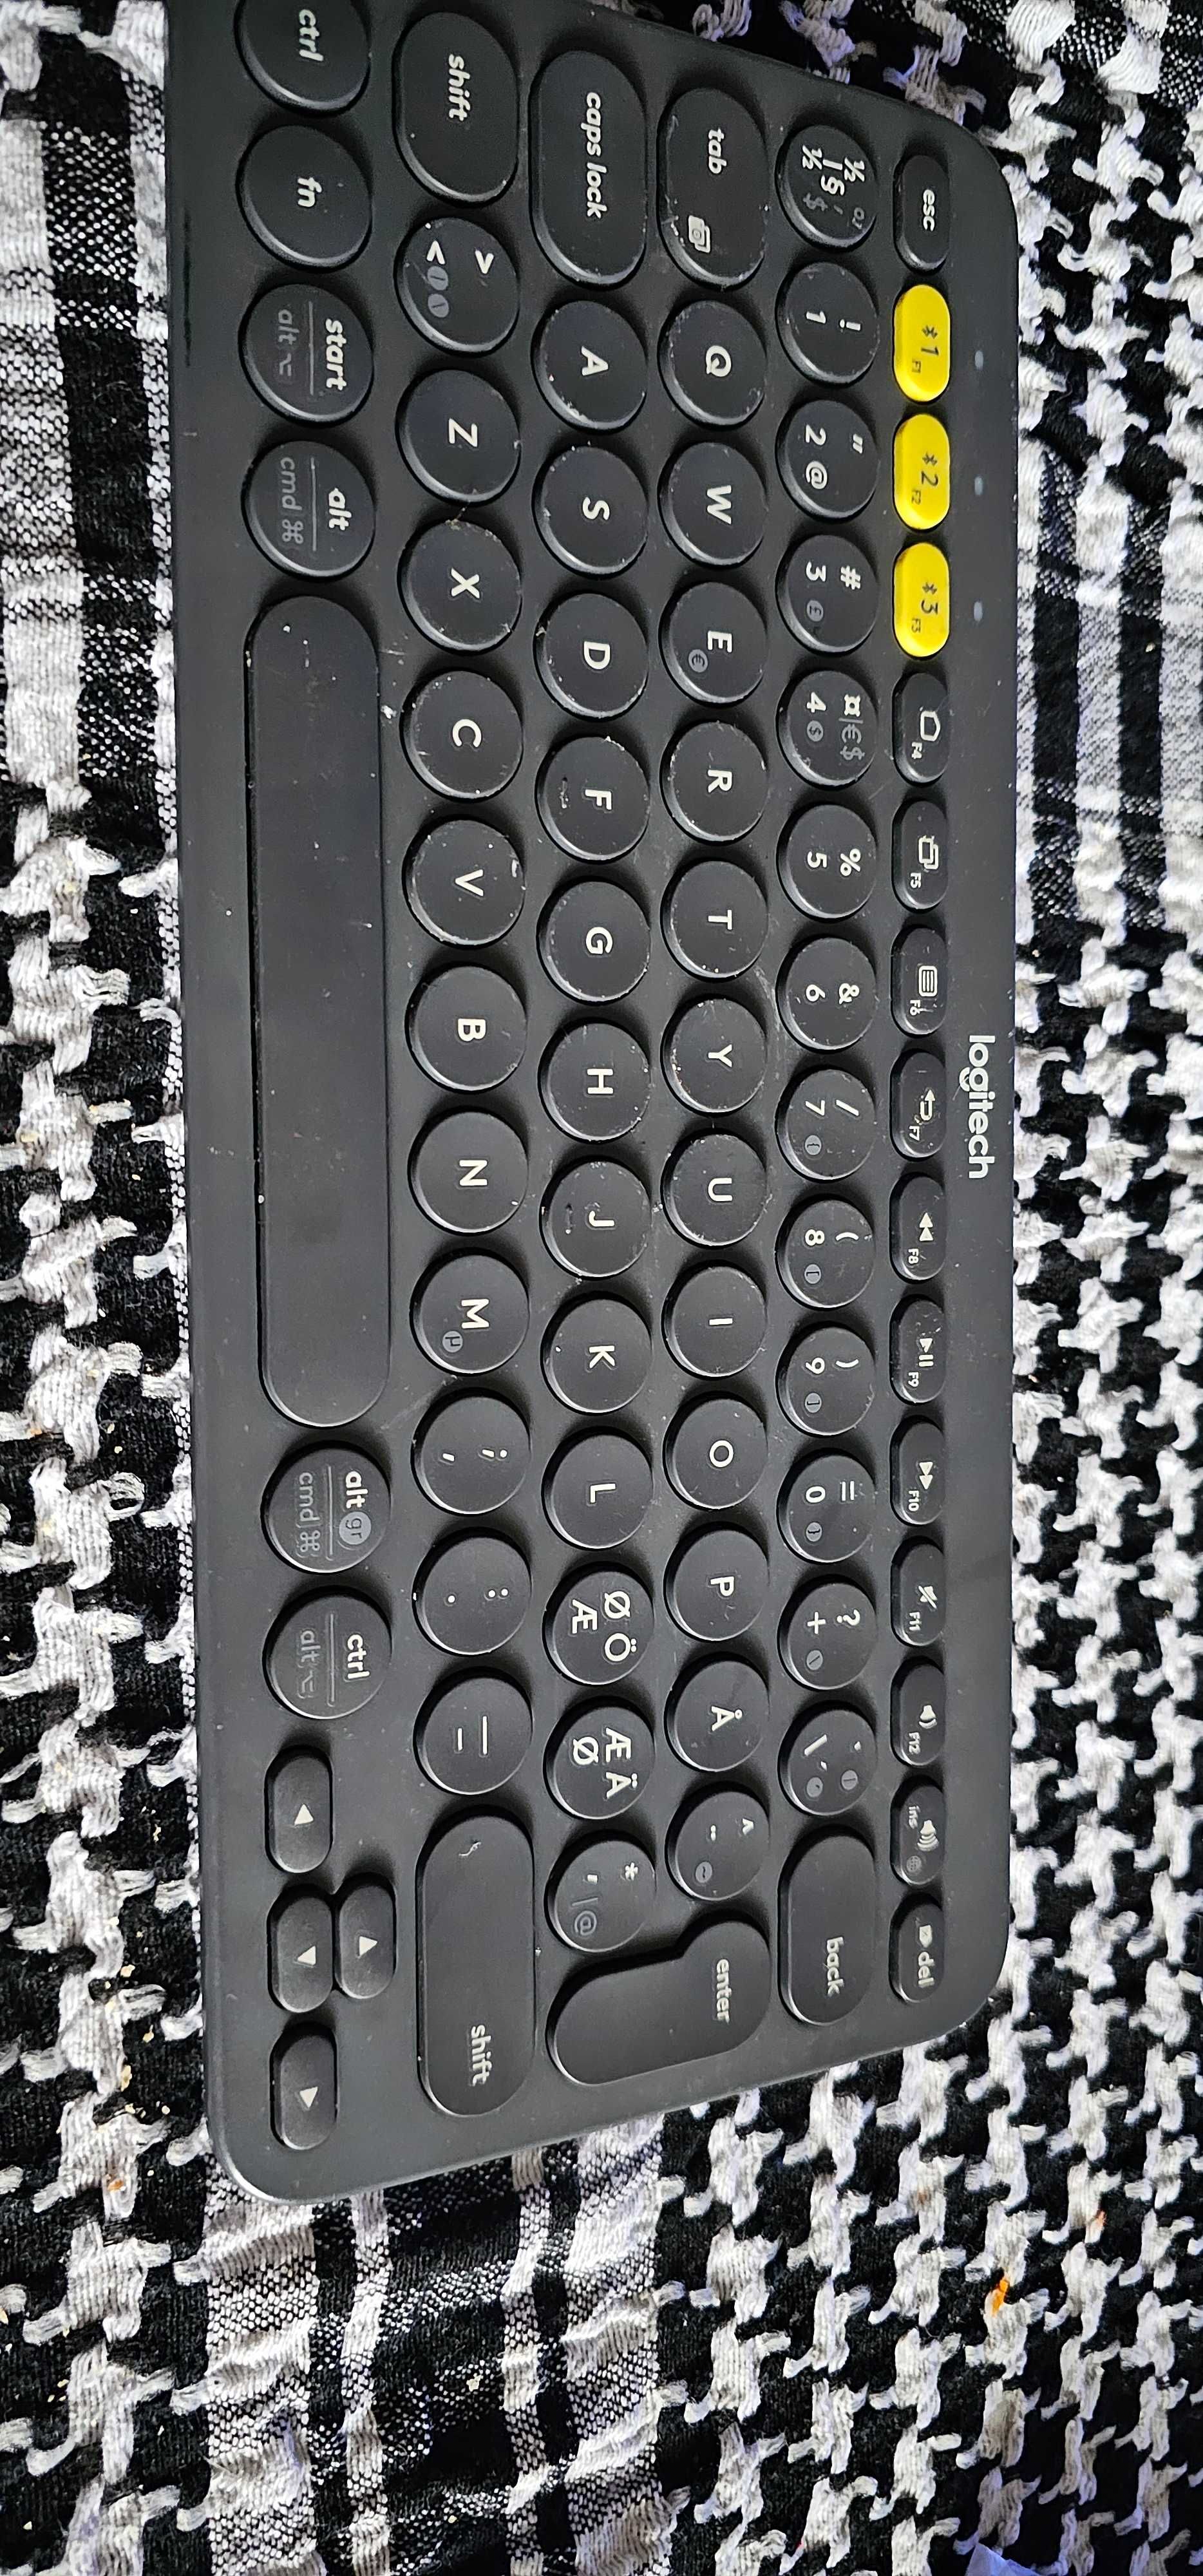 Tastatura Logitech K380, Multi-Device, Bluetooth, Dark Grey